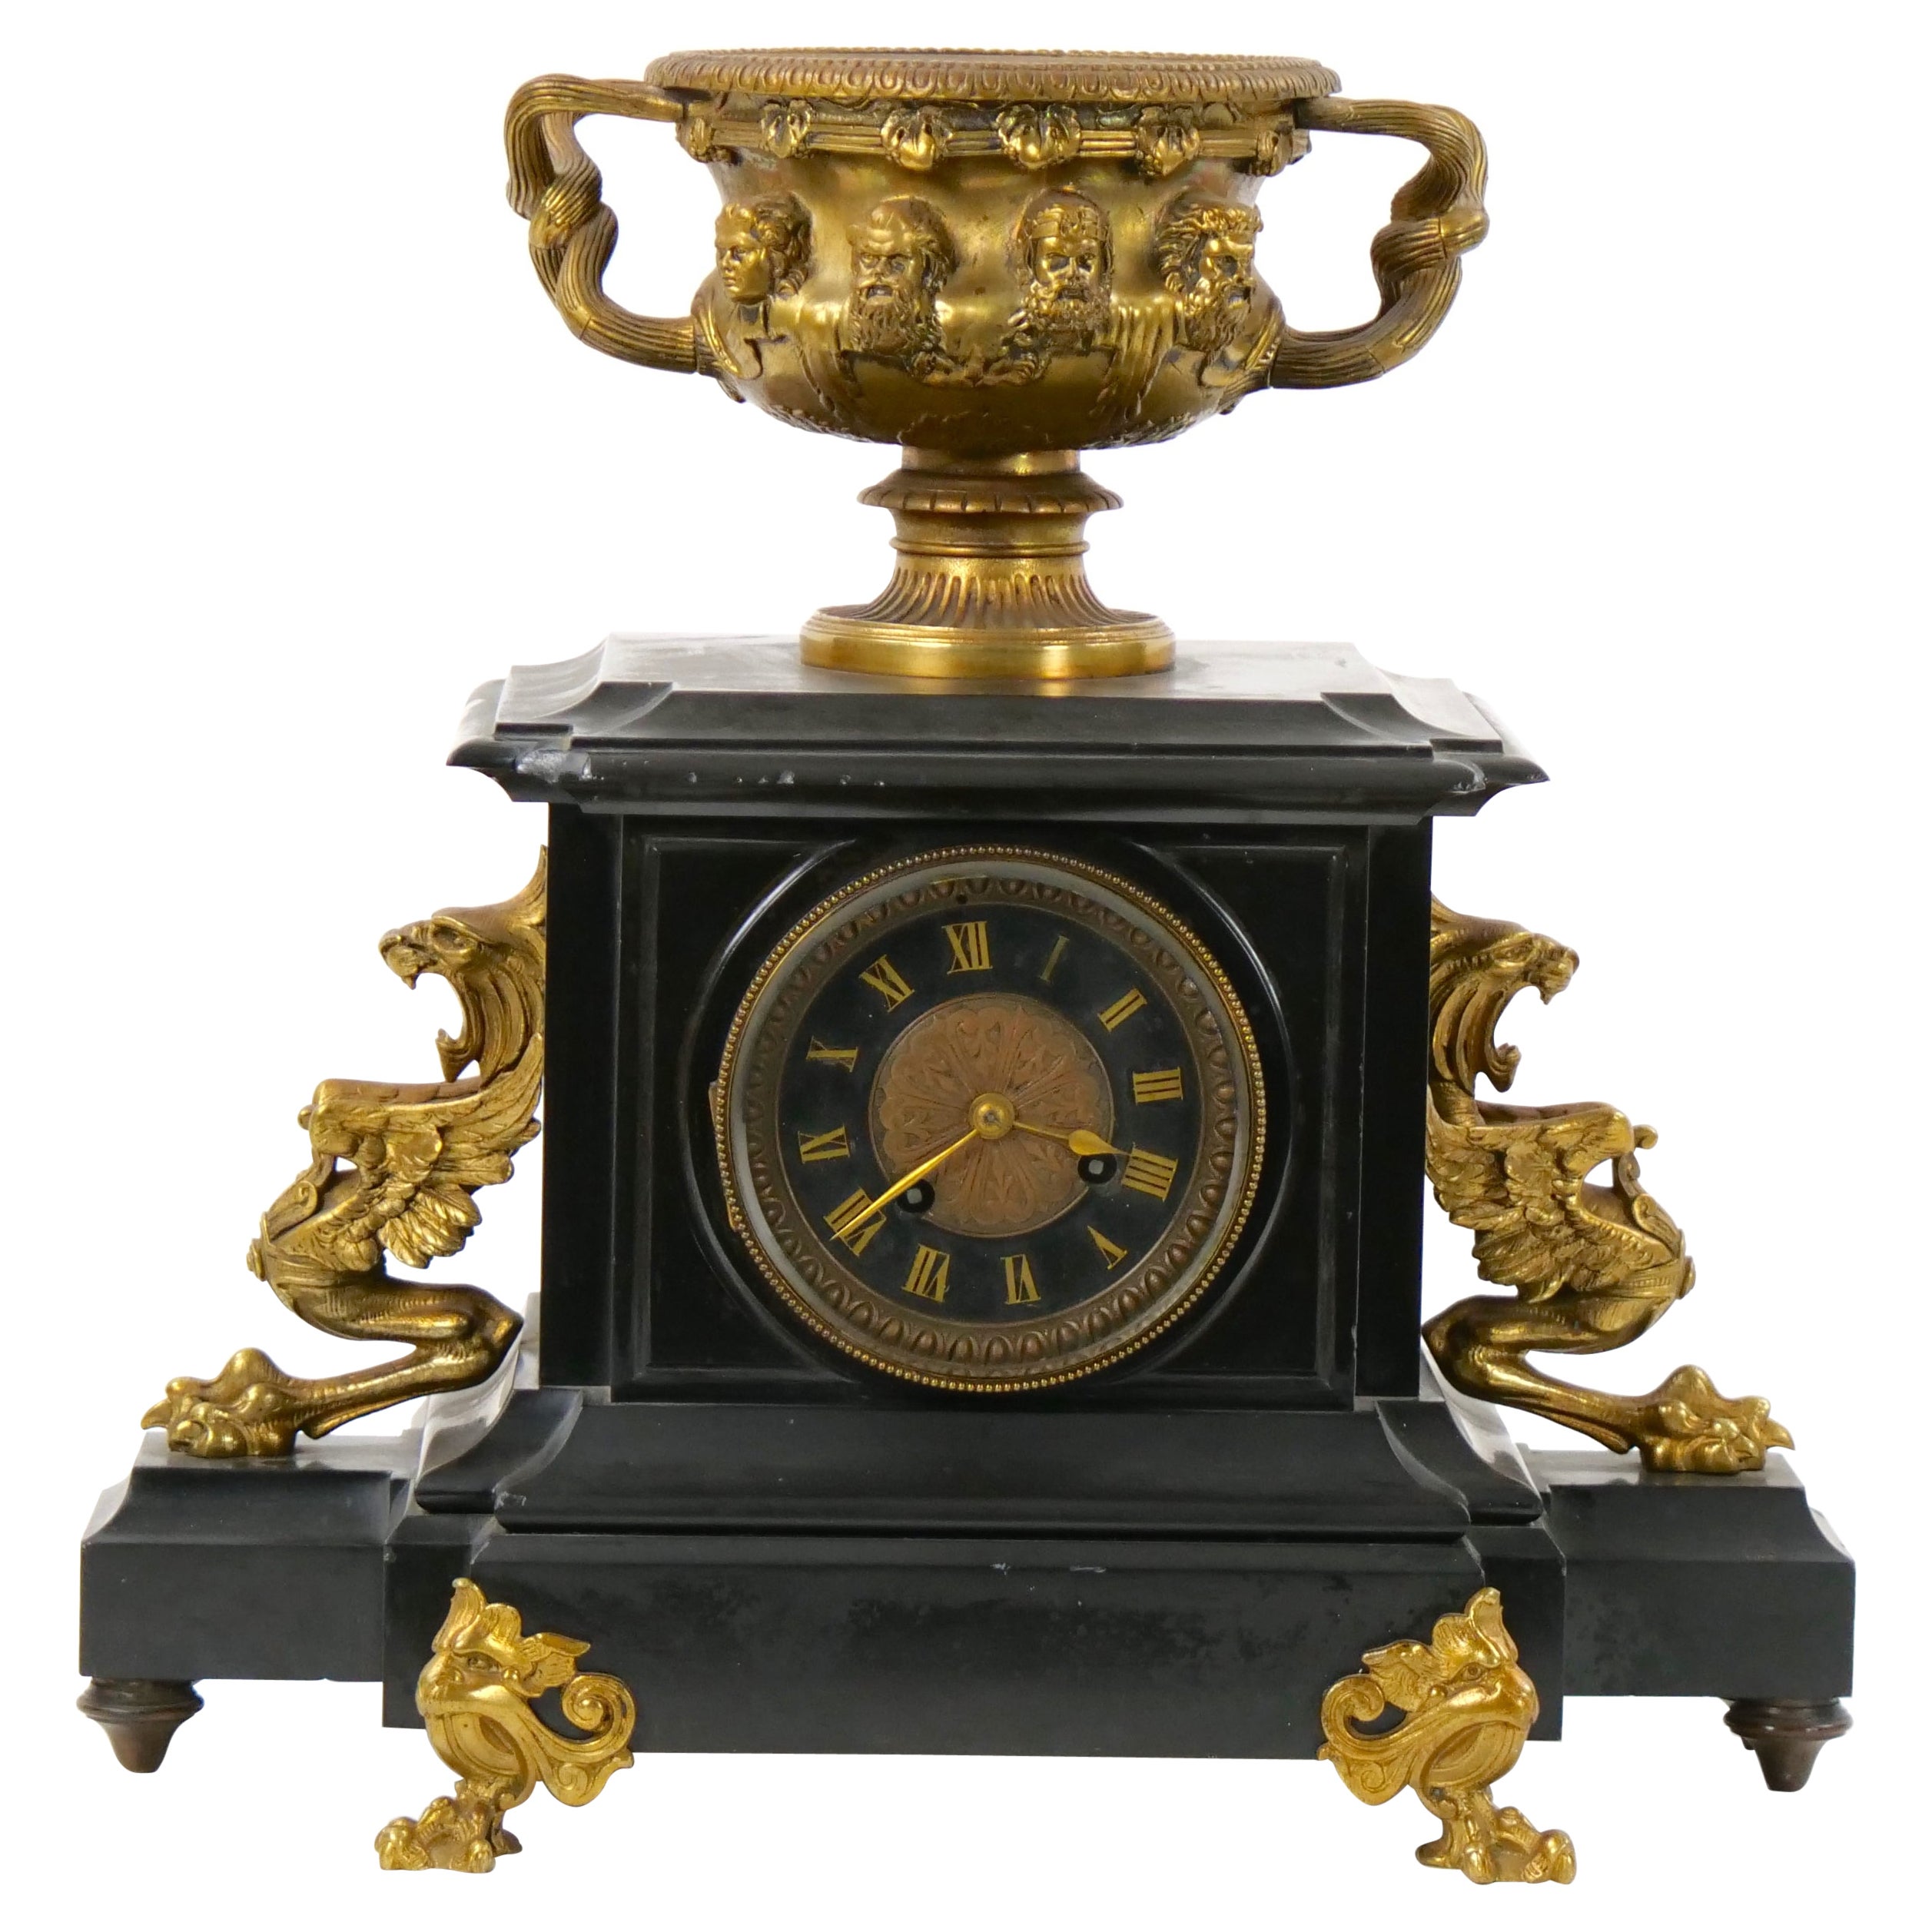 19th Century French Bronze & Black Marble Figural Mantel Clock